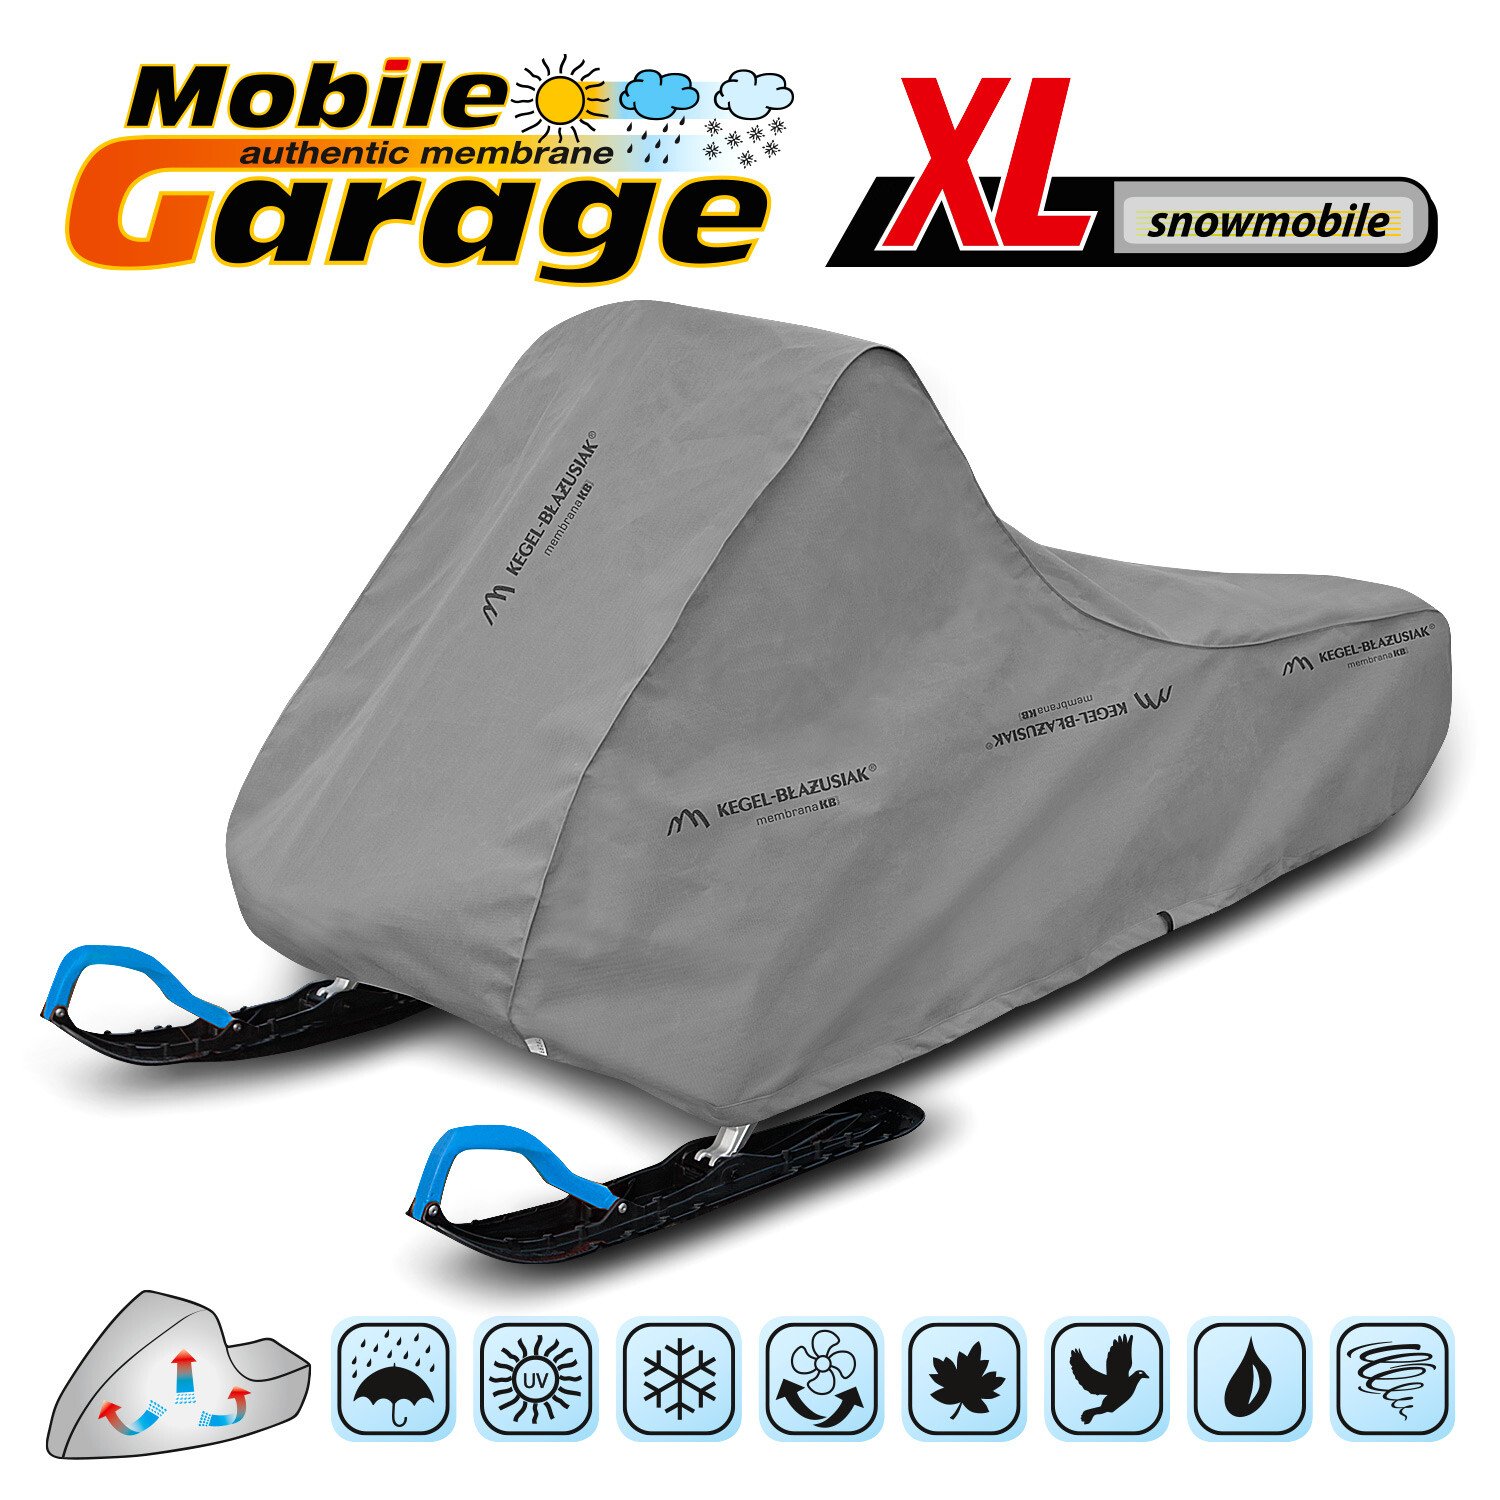 Mobile Garage snowmobile cover - XL - 350x90x127cm thumb